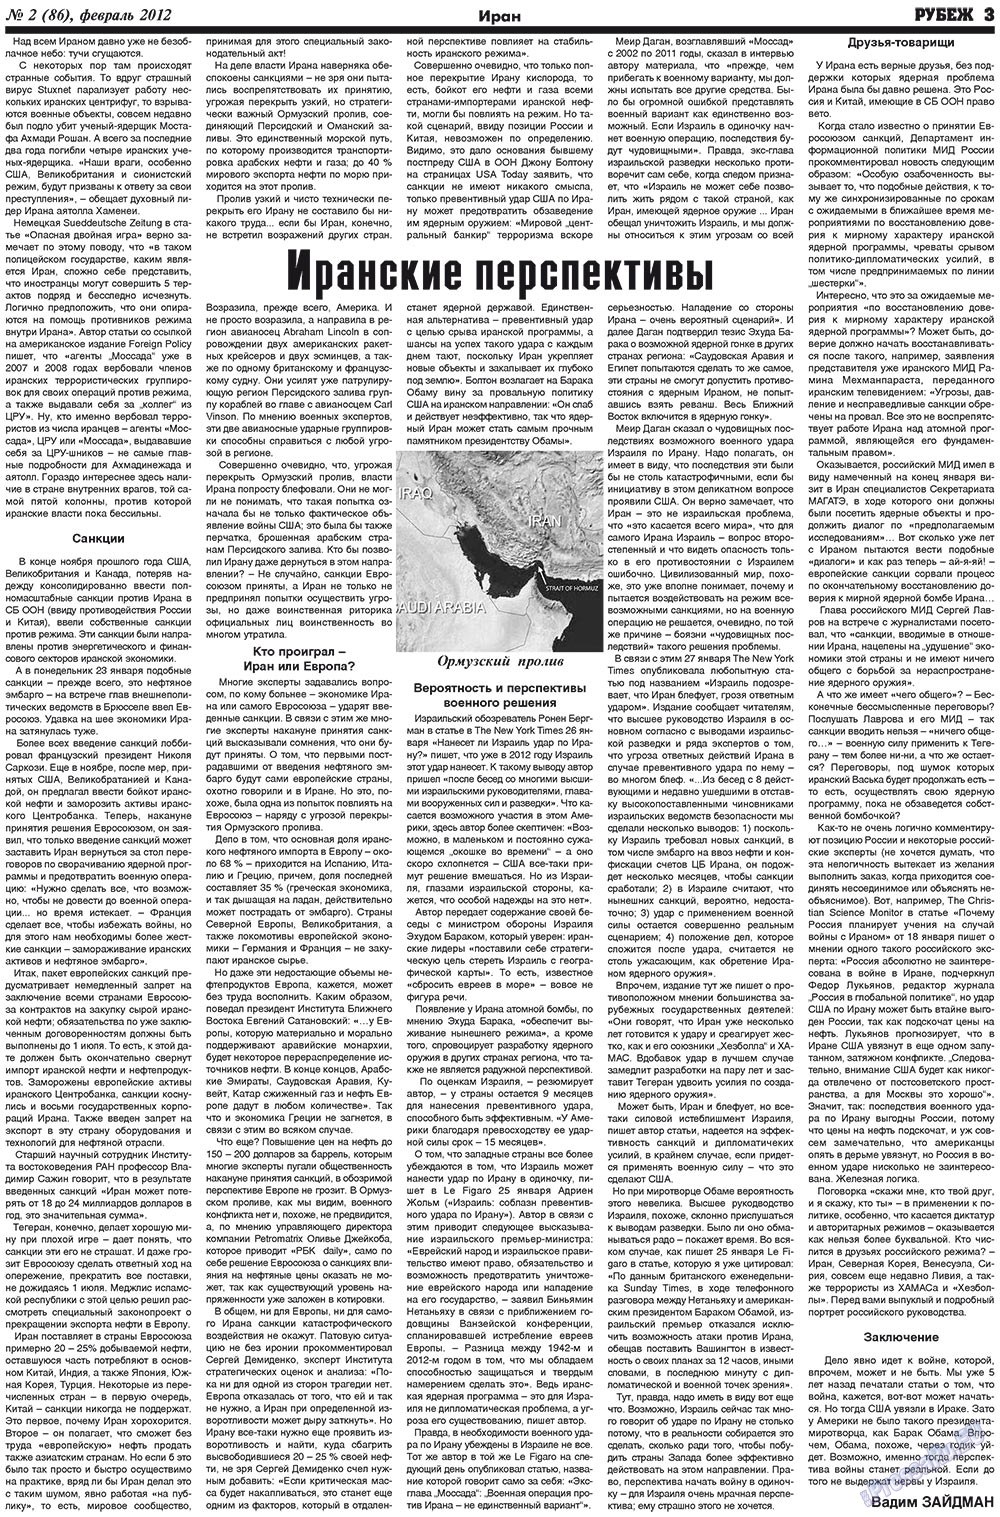 Рубеж, газета. 2012 №2 стр.3